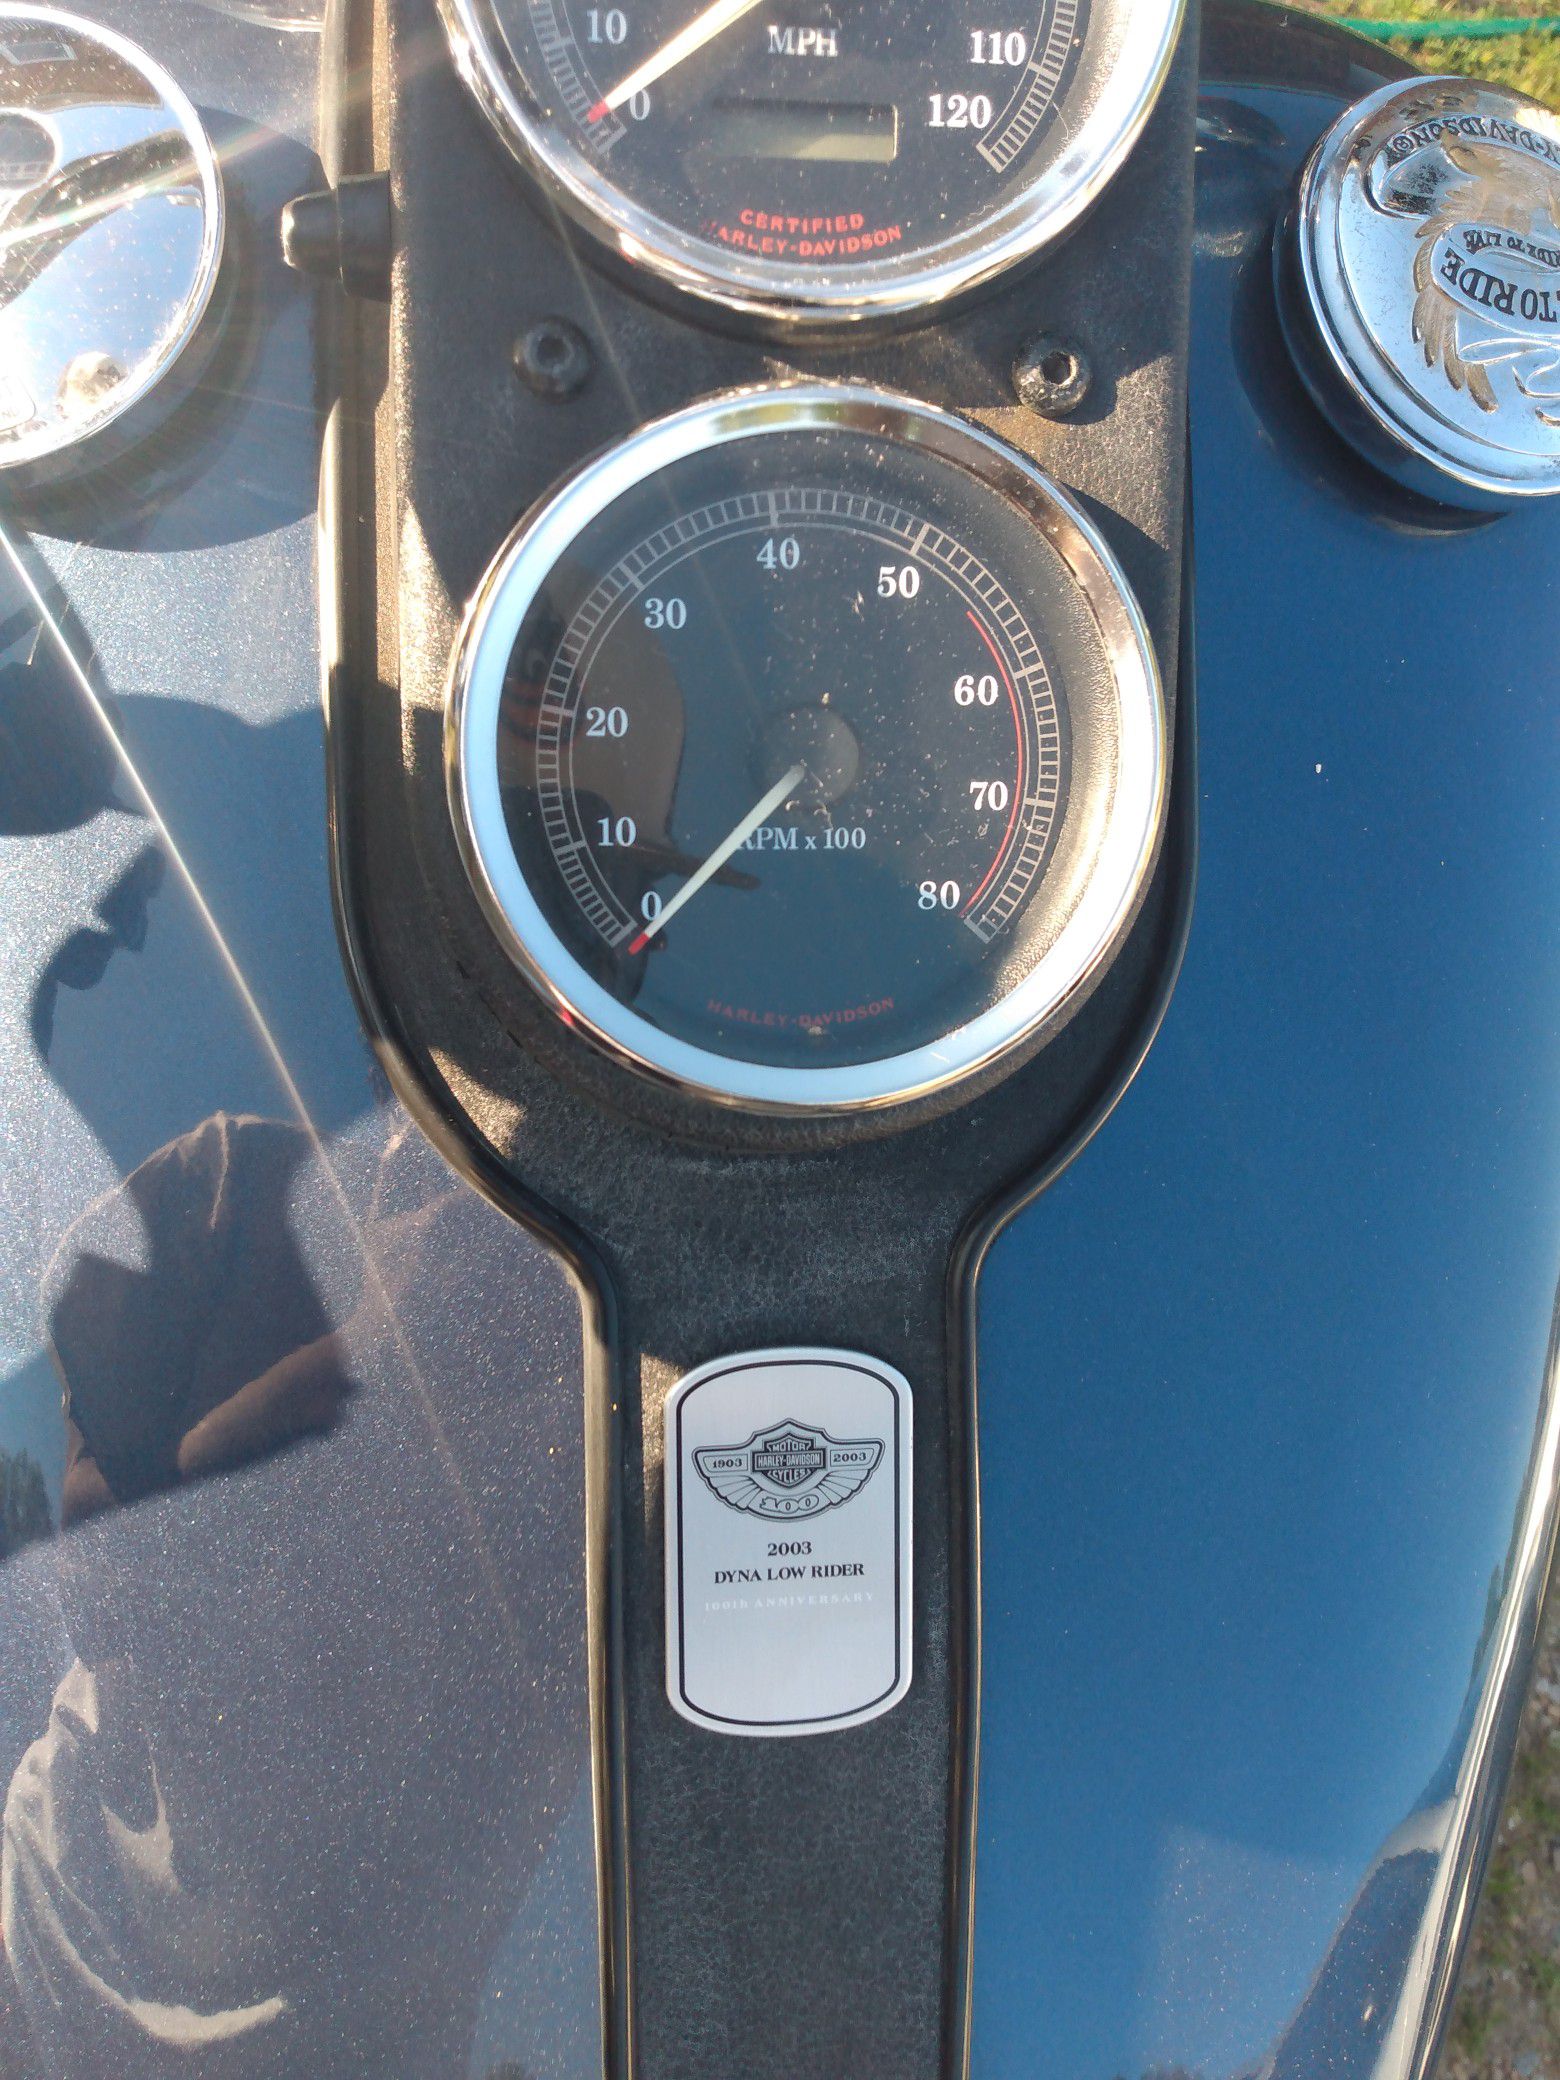 2003 Harley Davidson 100 anniversary